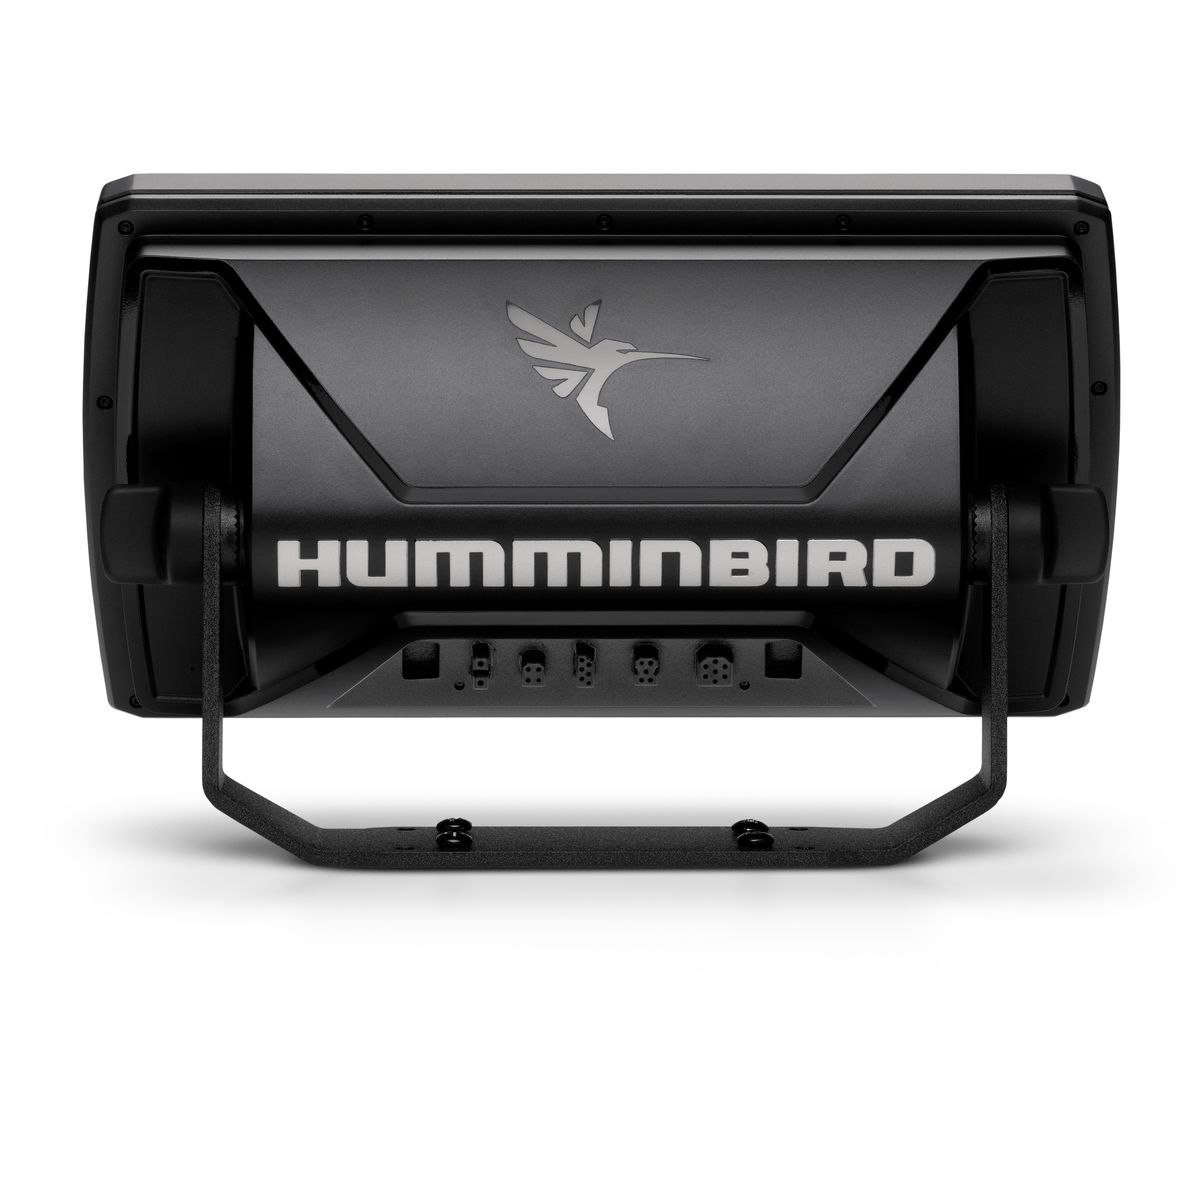 Humminbird HELIX 8 CHIRP MDI GPS G4N